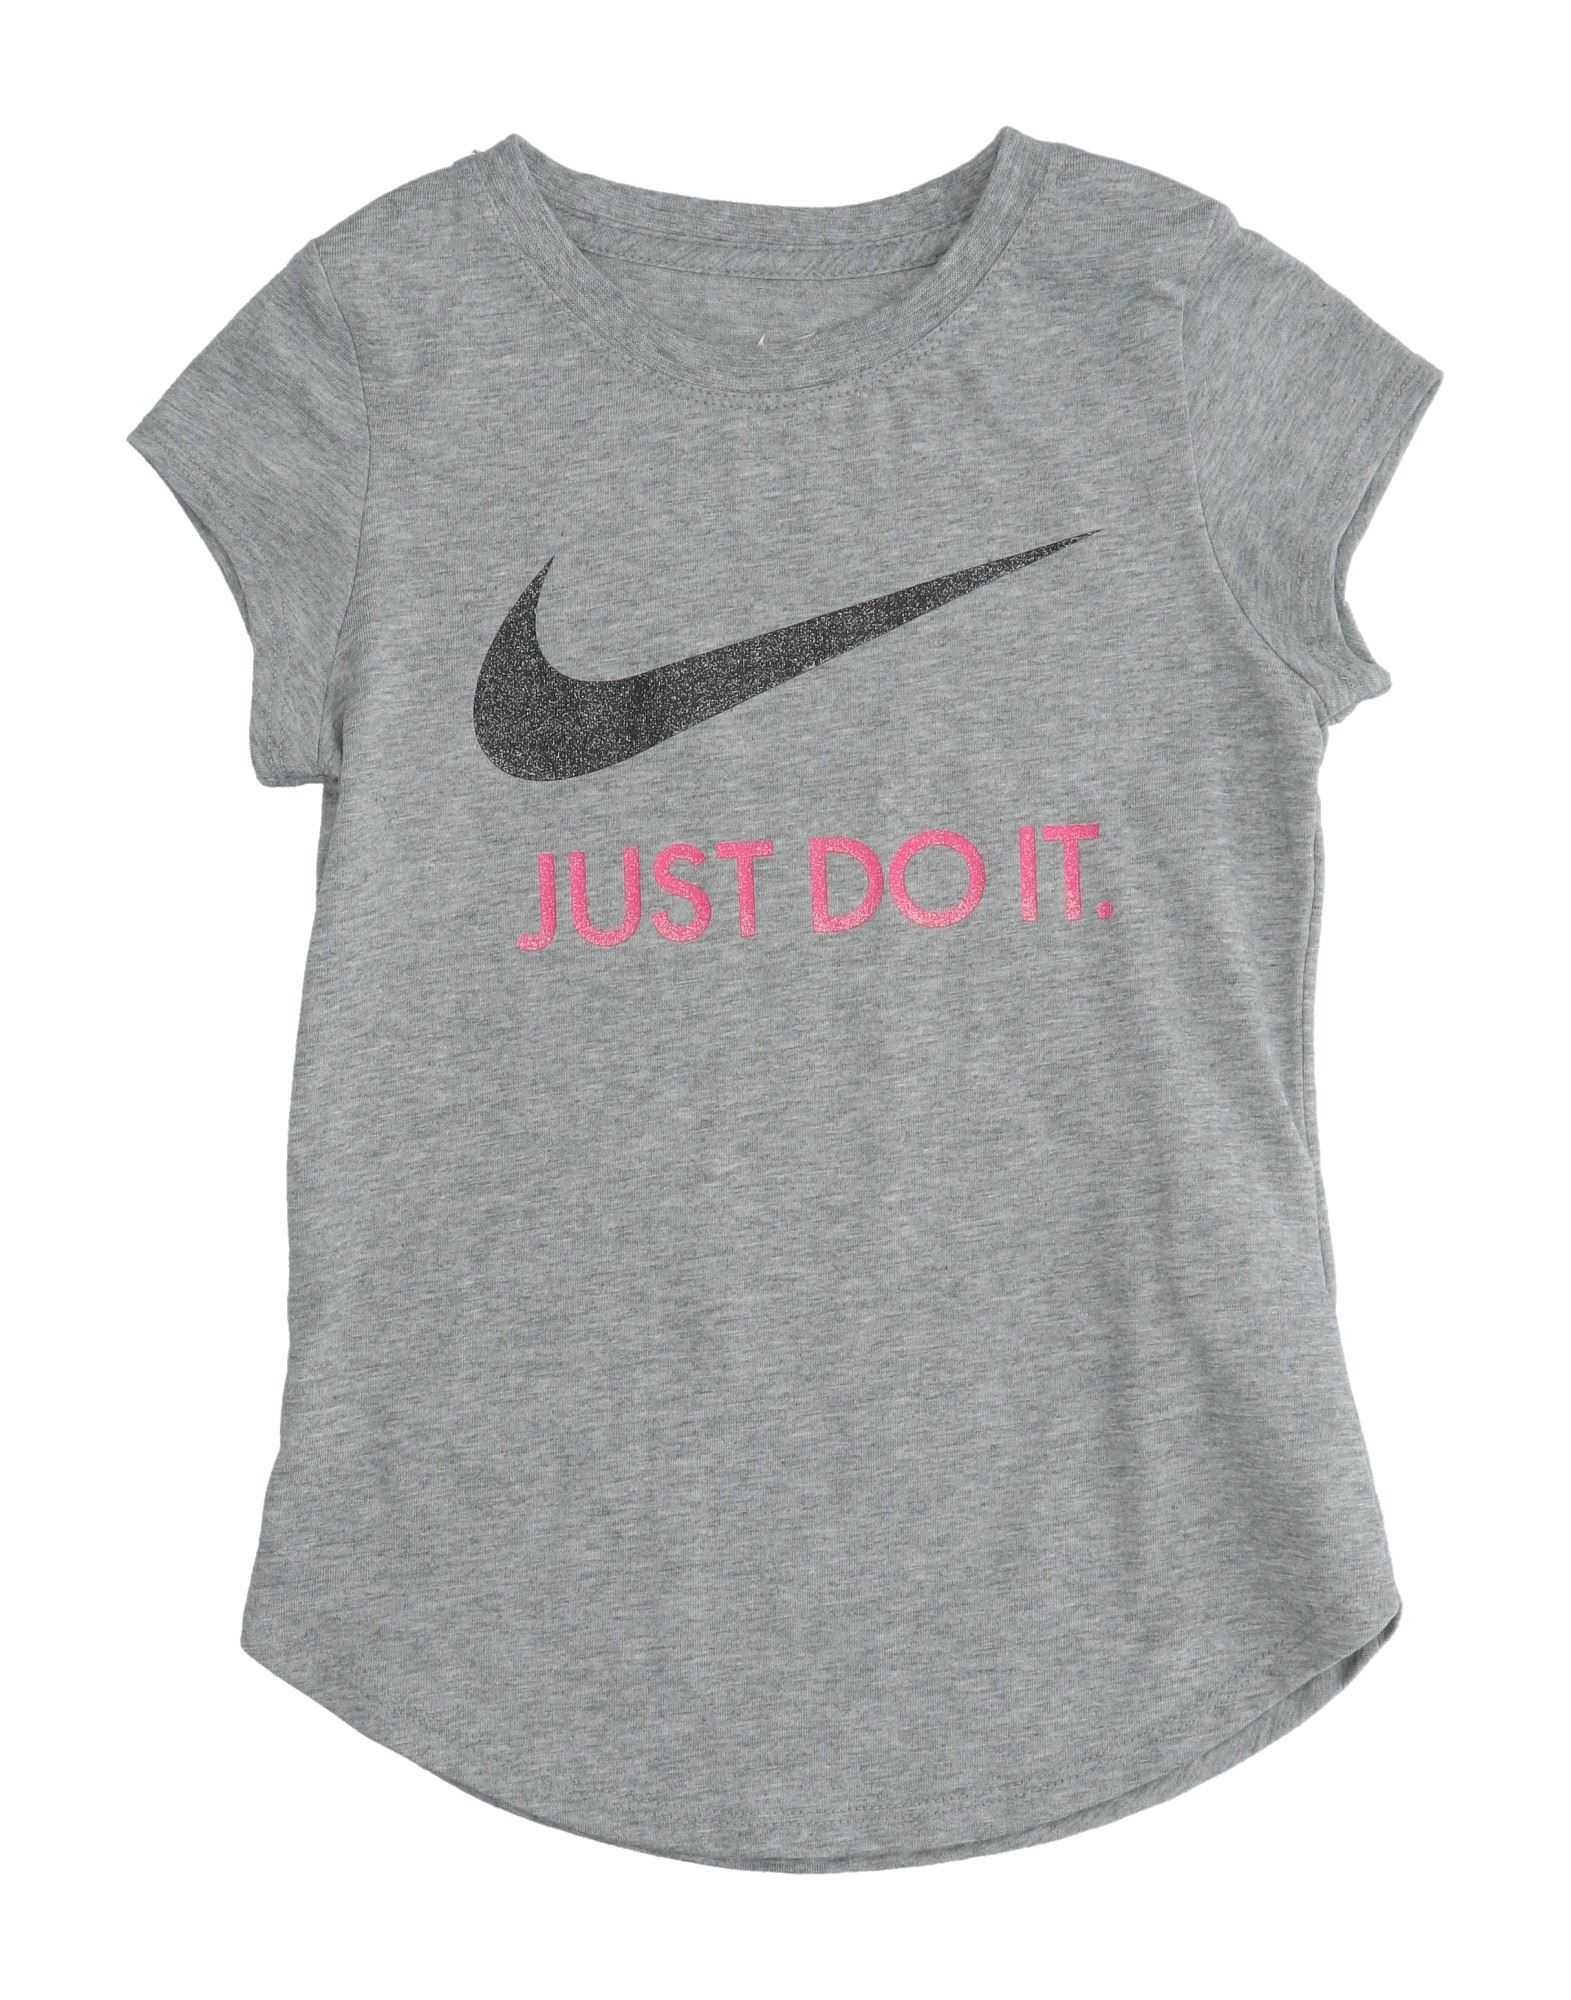 Nike Kids' T-shirts In Grey